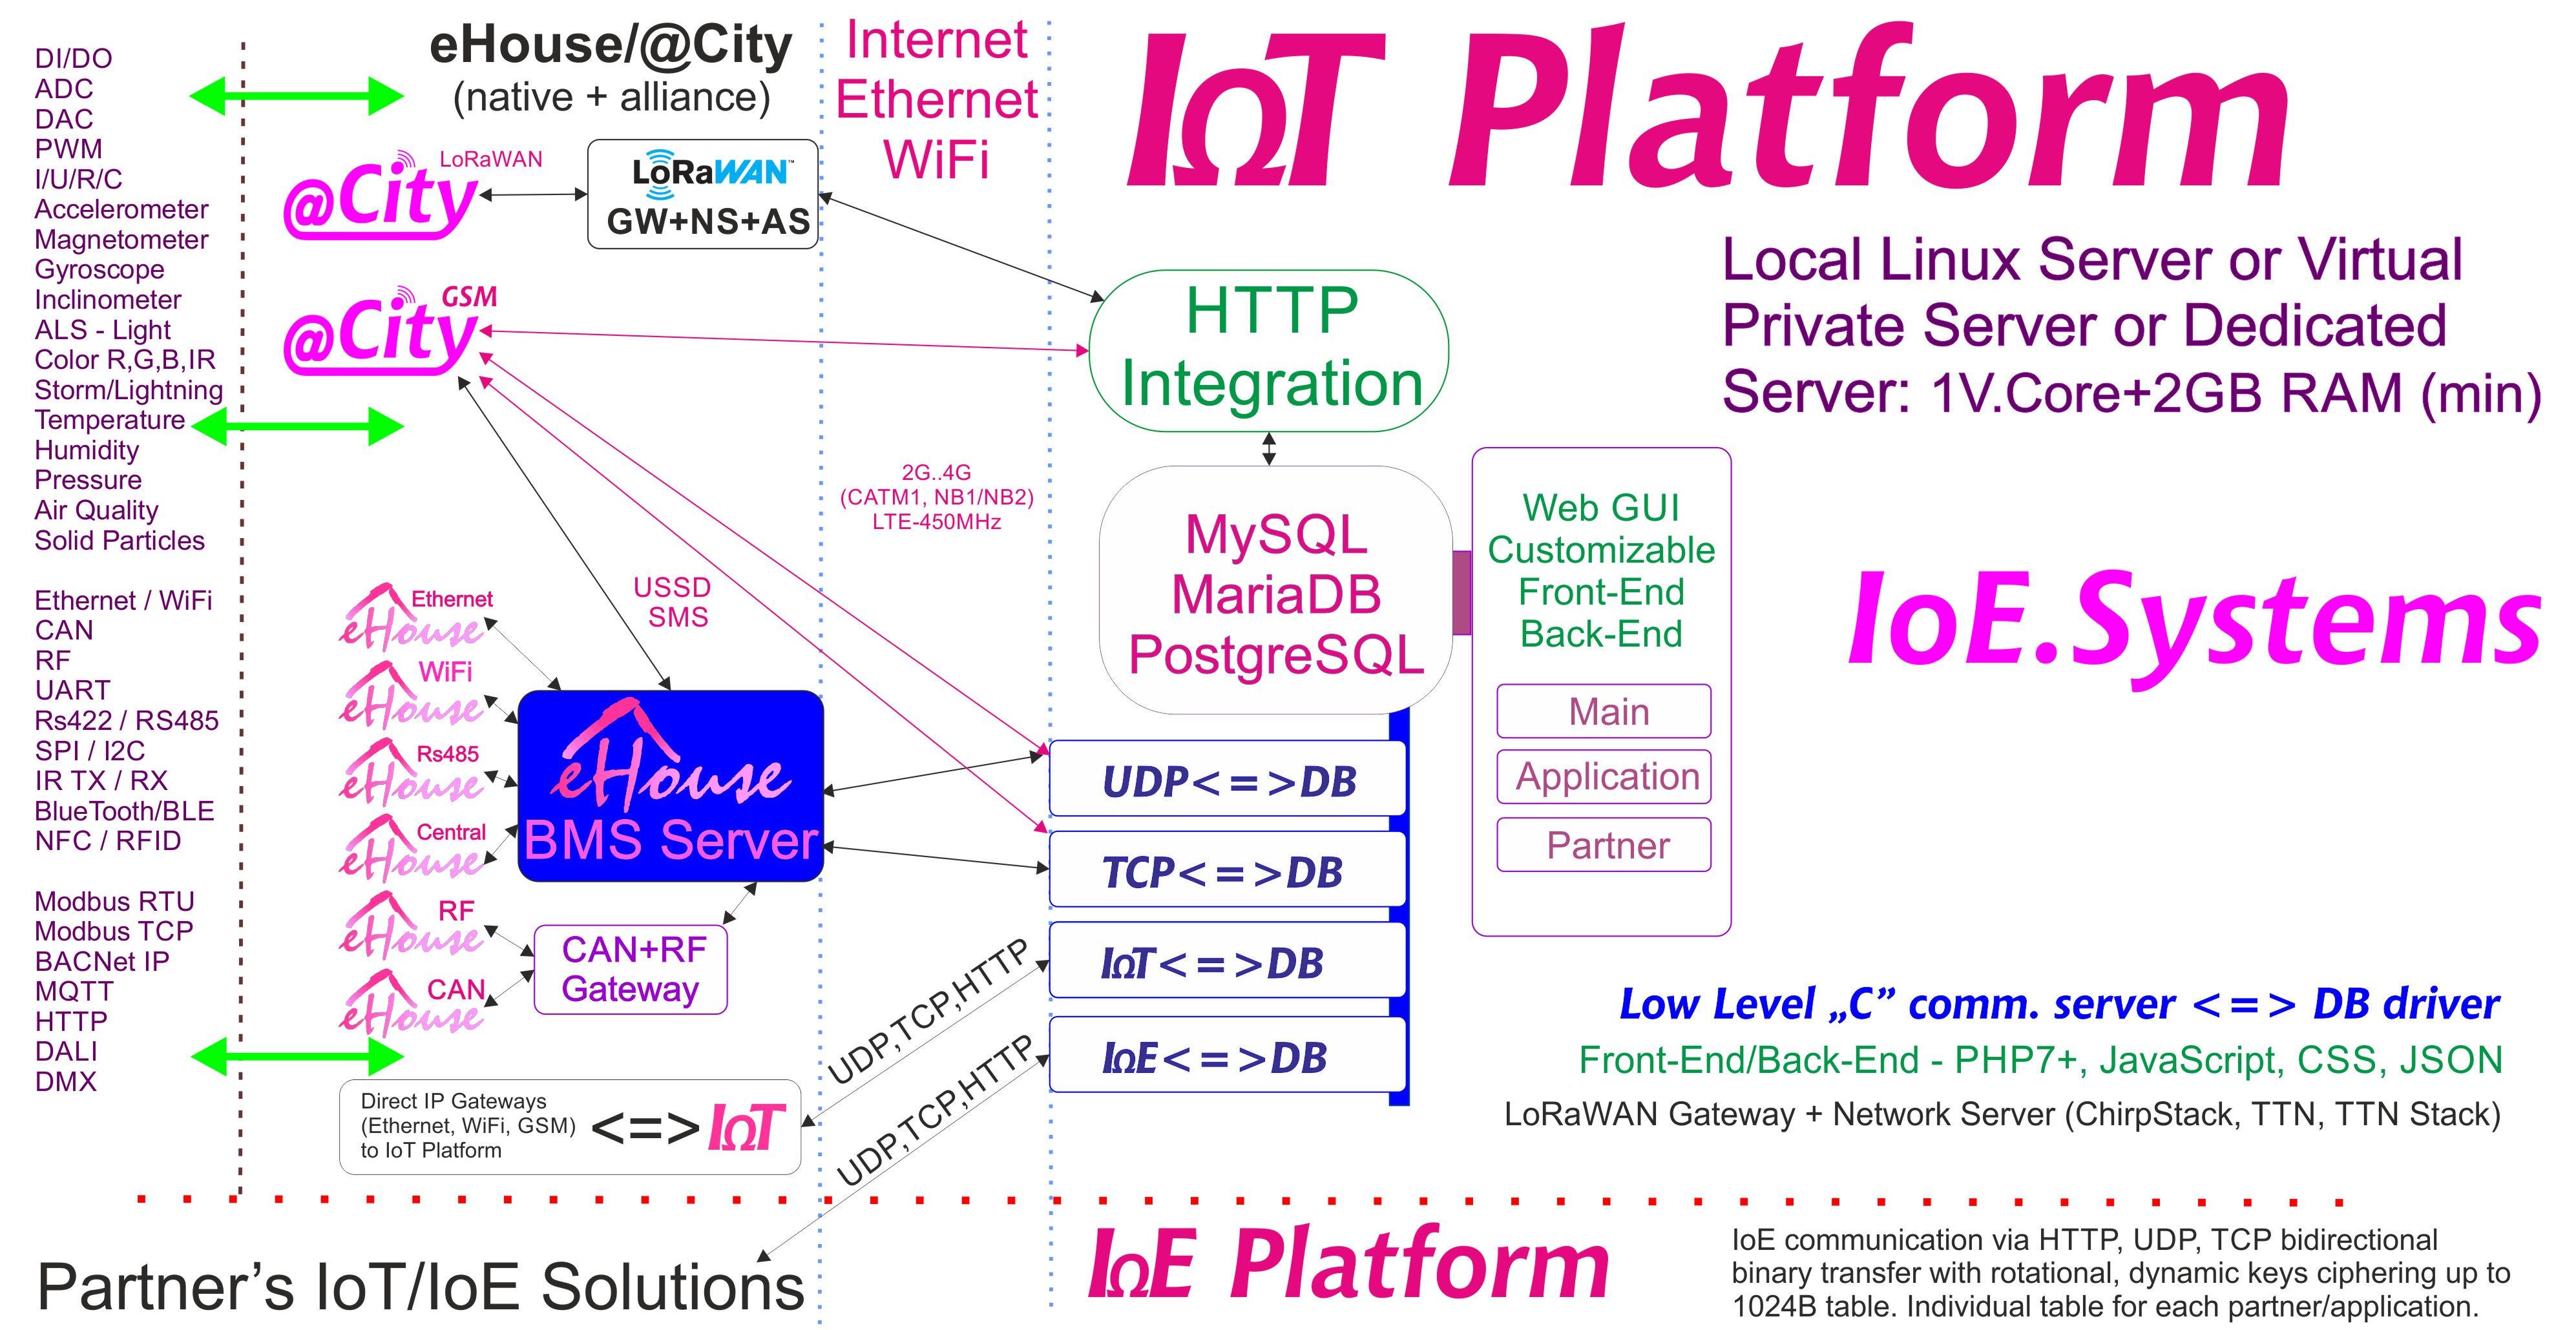 eHouse, eCity Server Software BAS, BMS, IoE, IoT Systems thiab Platform